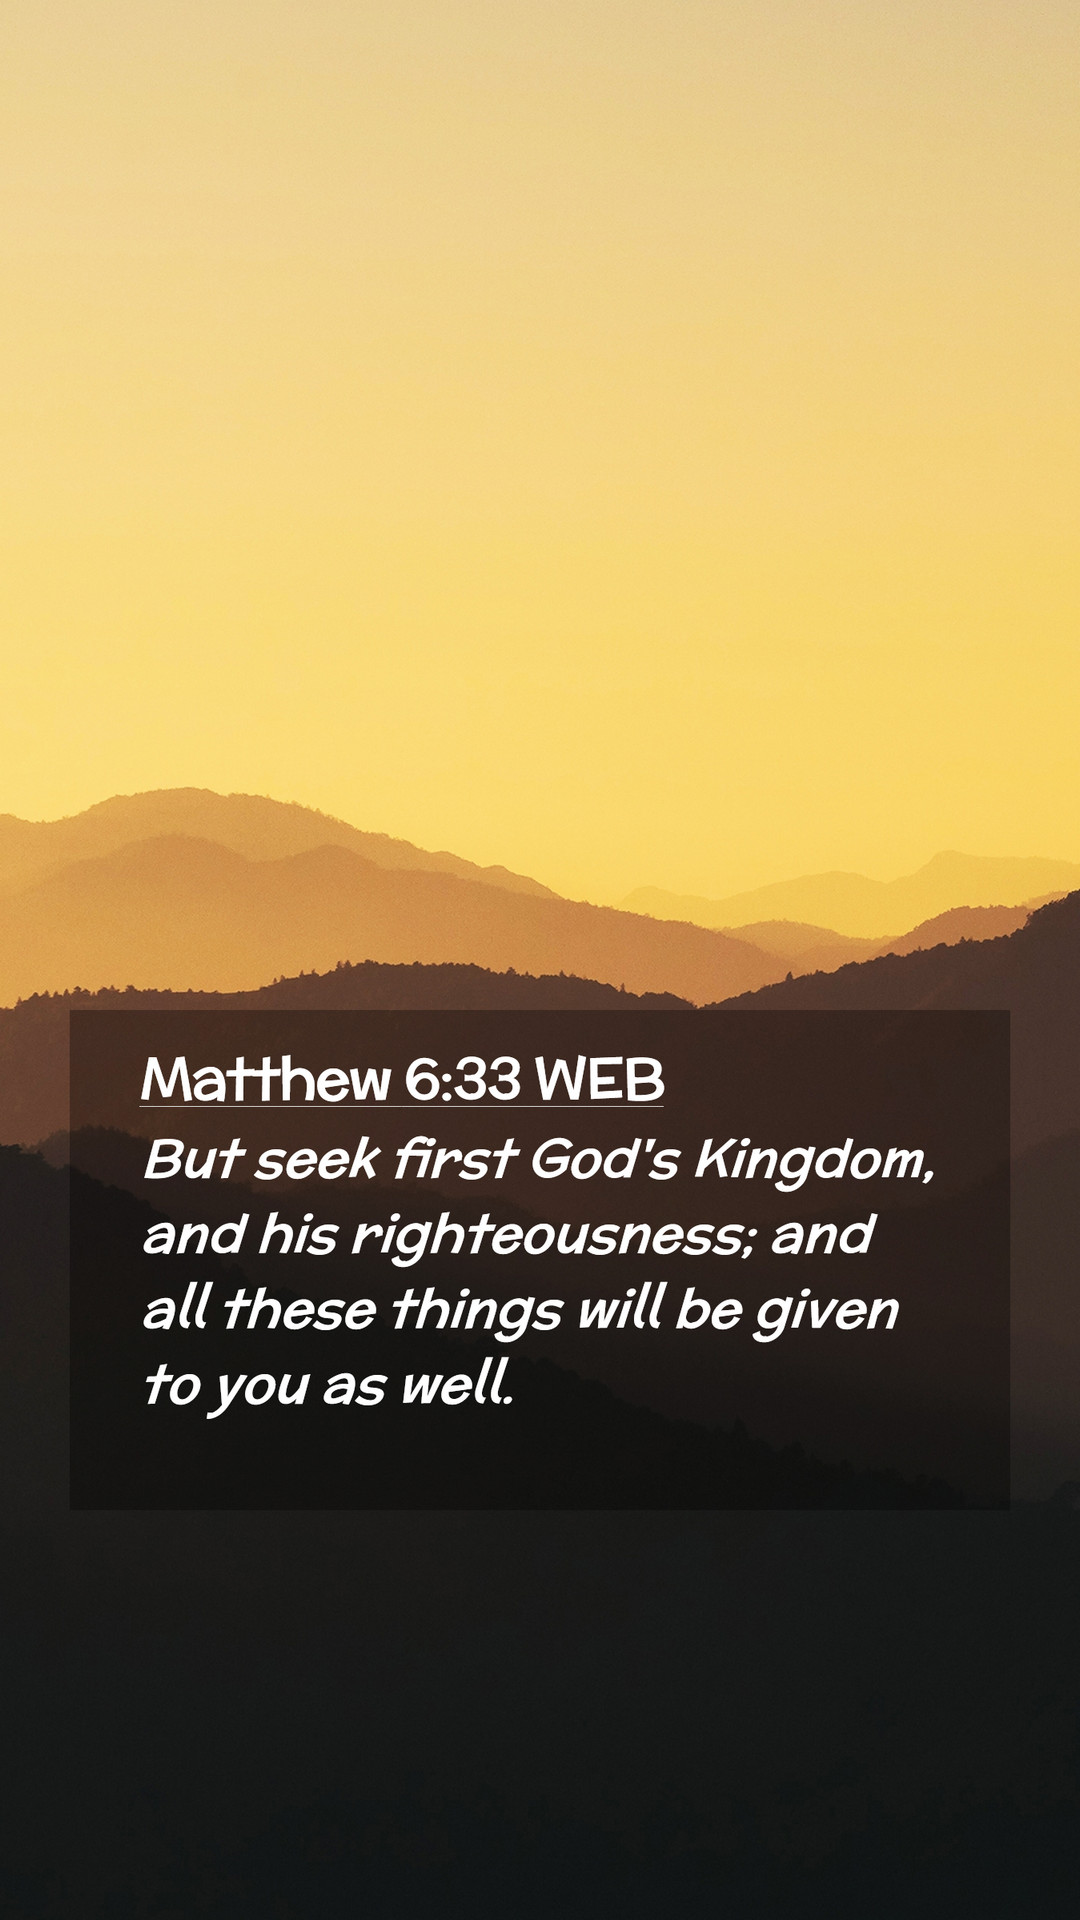 Matthew 6:33 WEB Mobile Phone Wallpaper seek first God's Kingdom